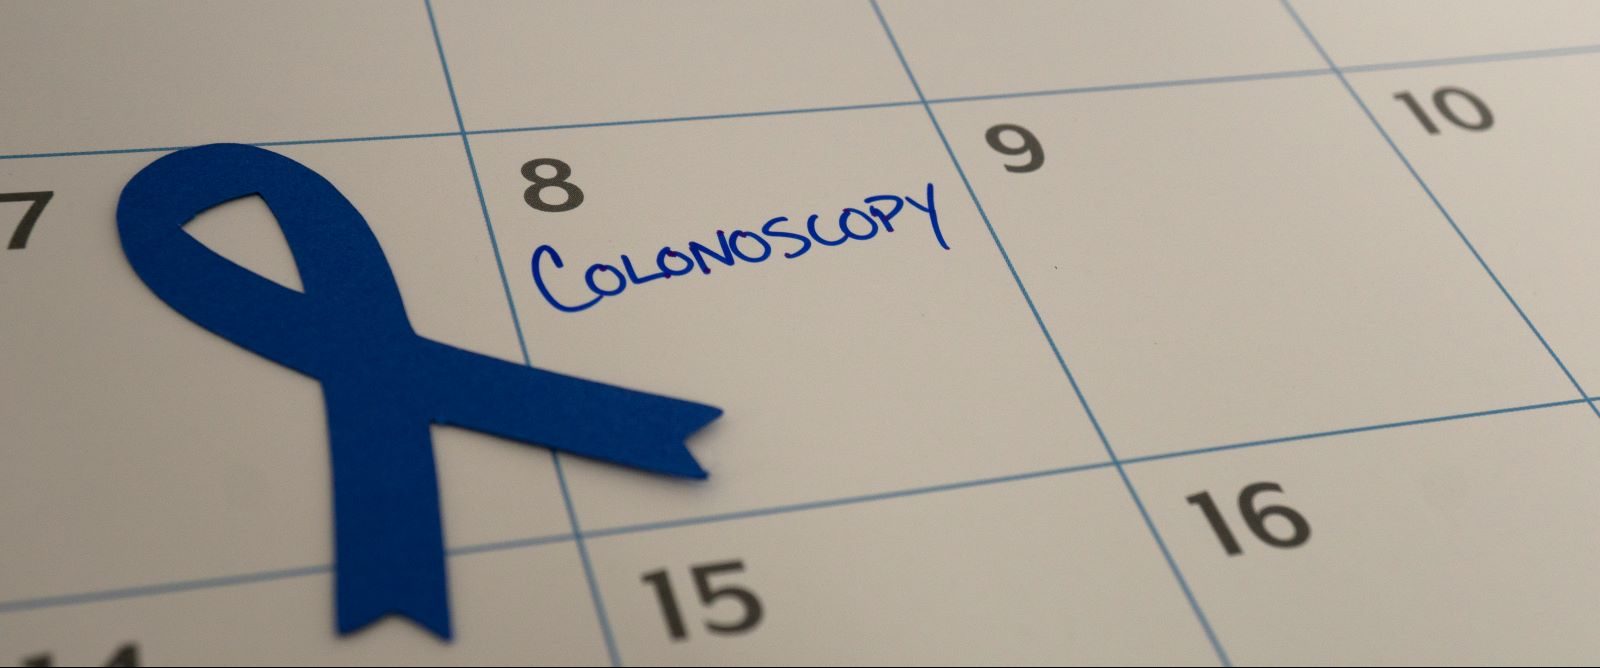 We asked gastroenterologist Neil D. Parikh, MD, based in Farmington, to dispel five common colonoscopy myths.